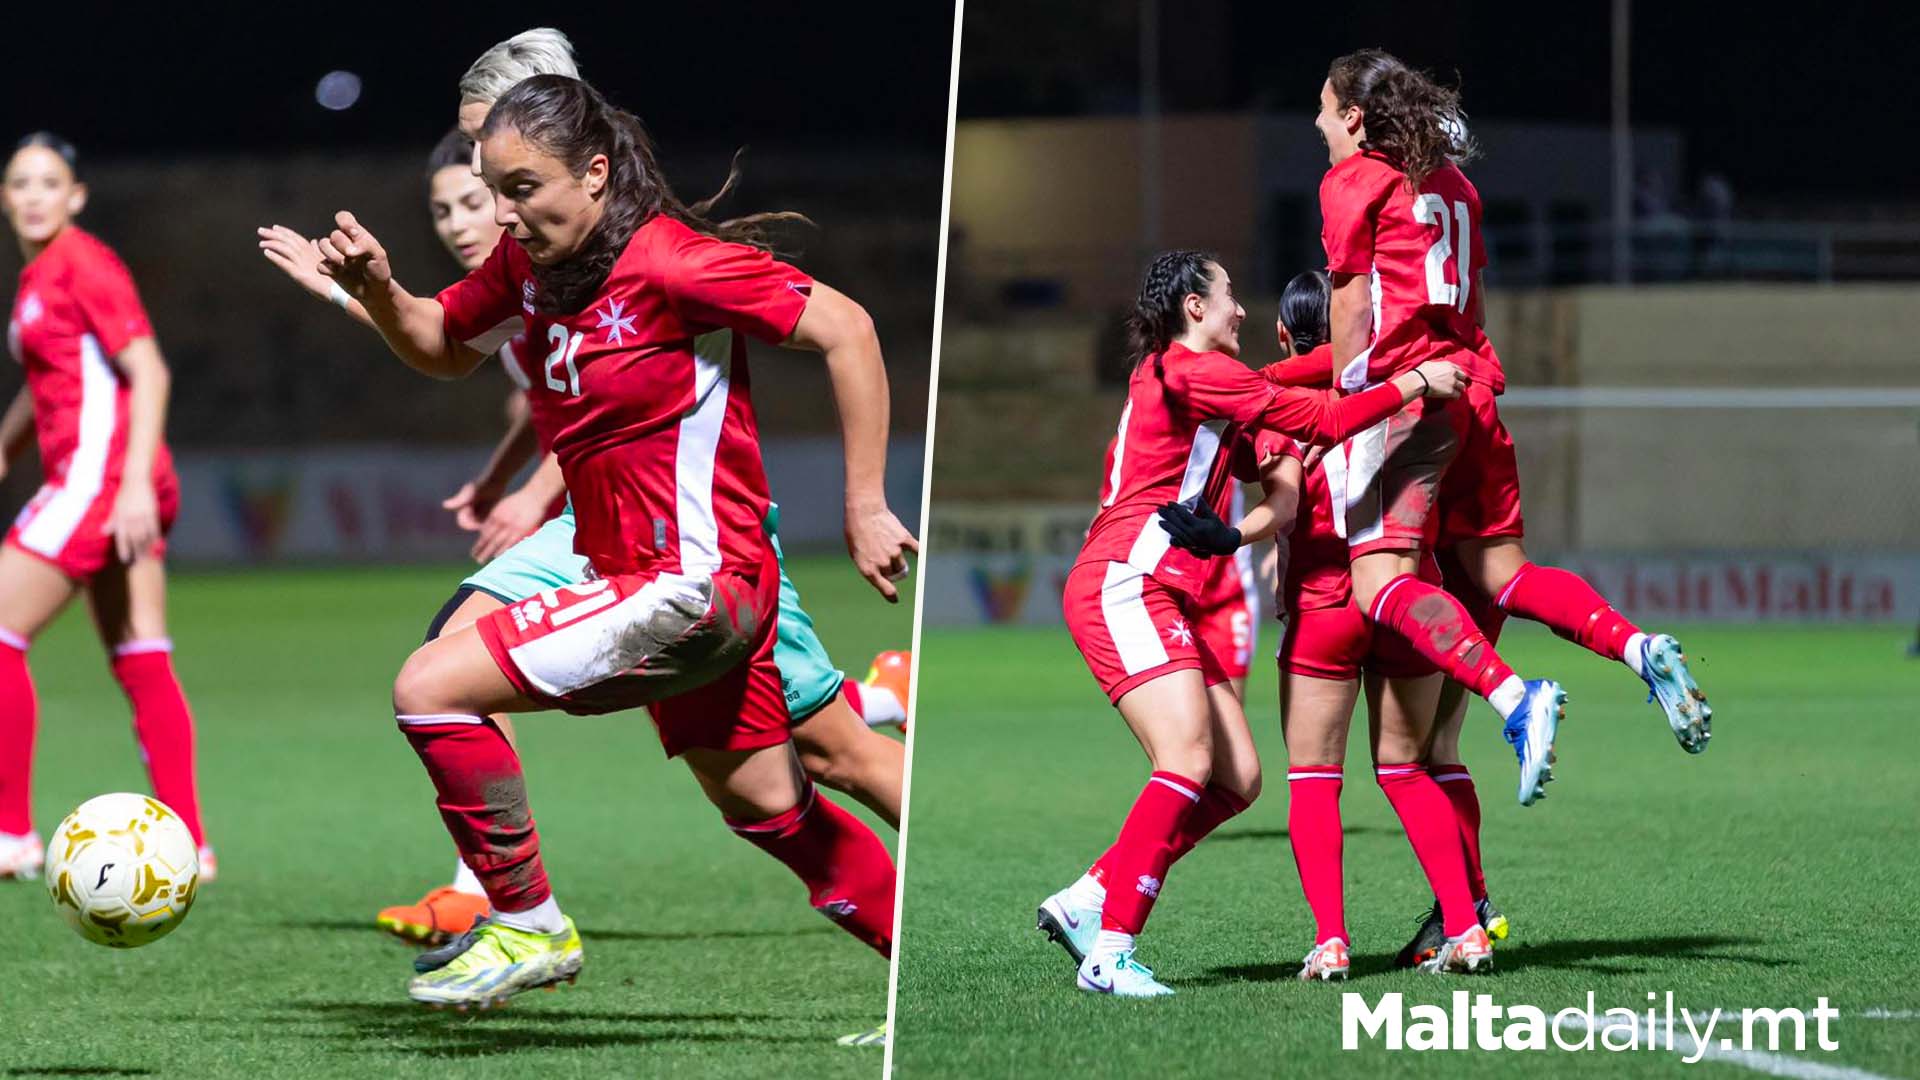 Draw For Malta And Belarus: Malta Still Unbeaten